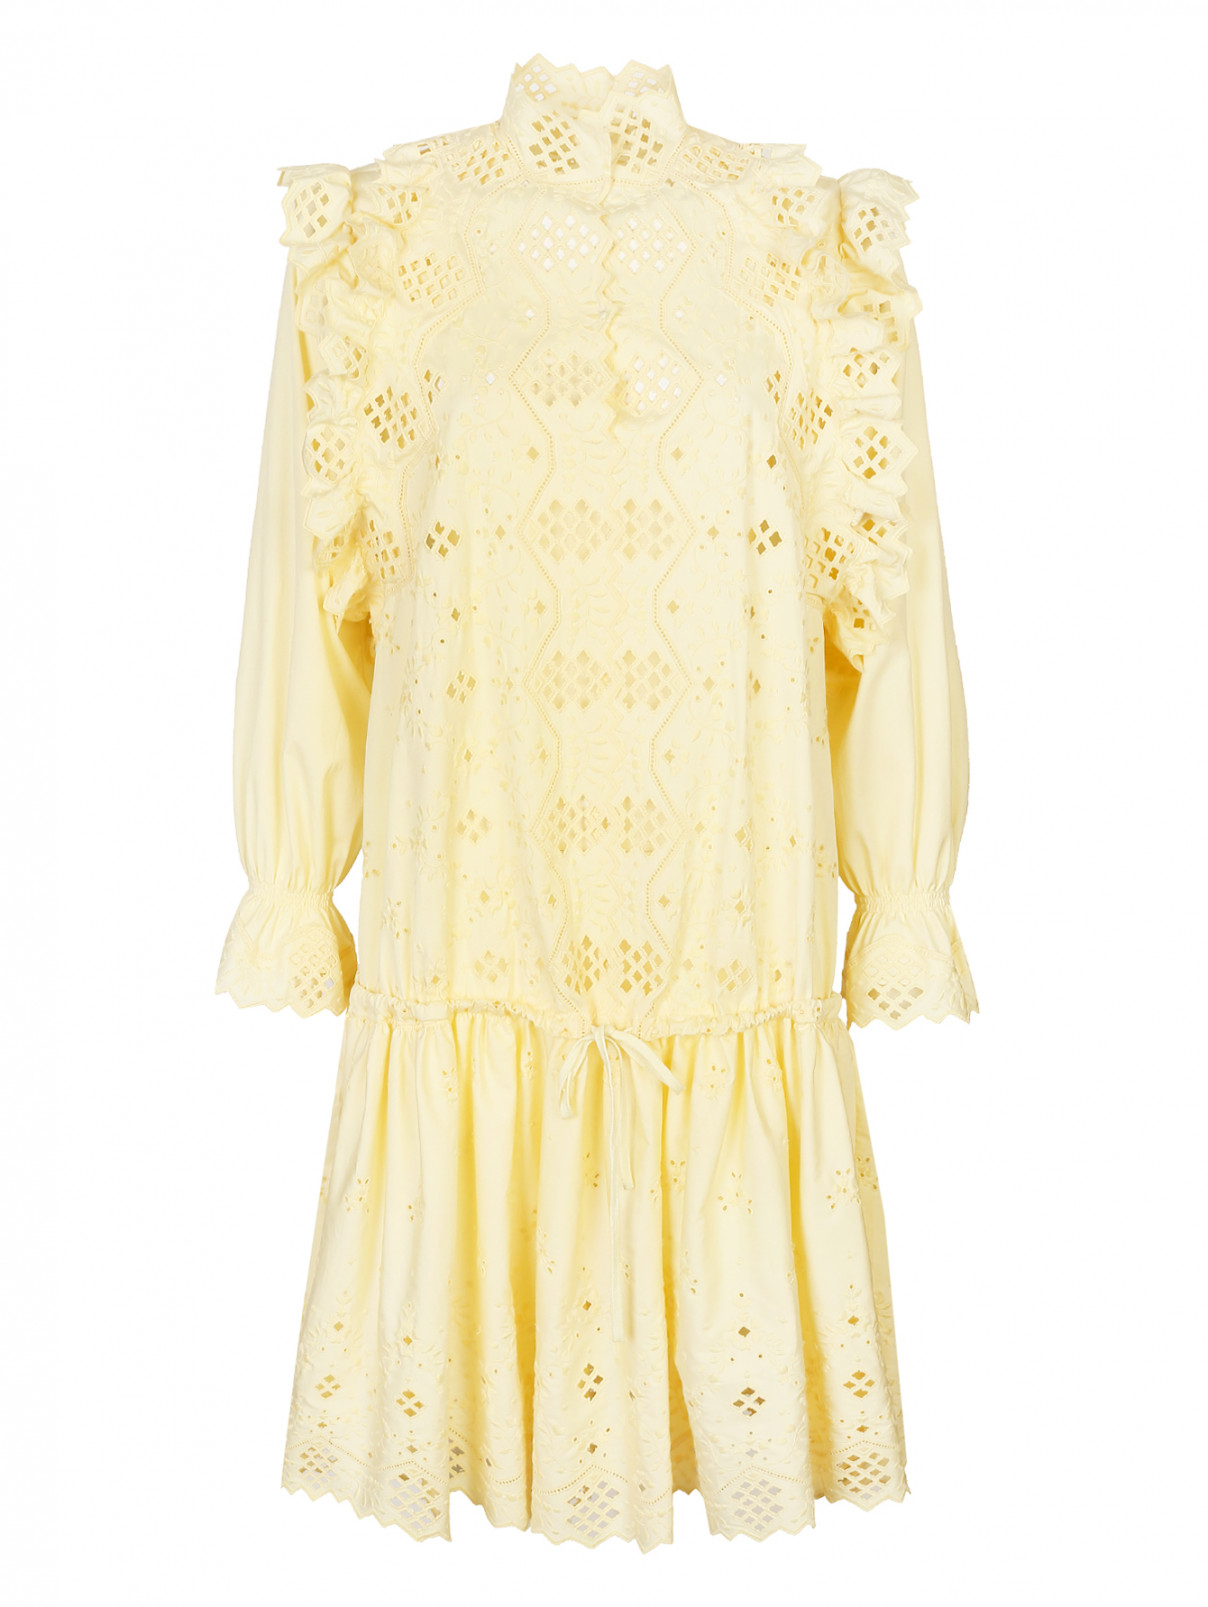 Платье из хлопкового кружева Alberta Ferretti  –  Общий вид  – Цвет:  Желтый